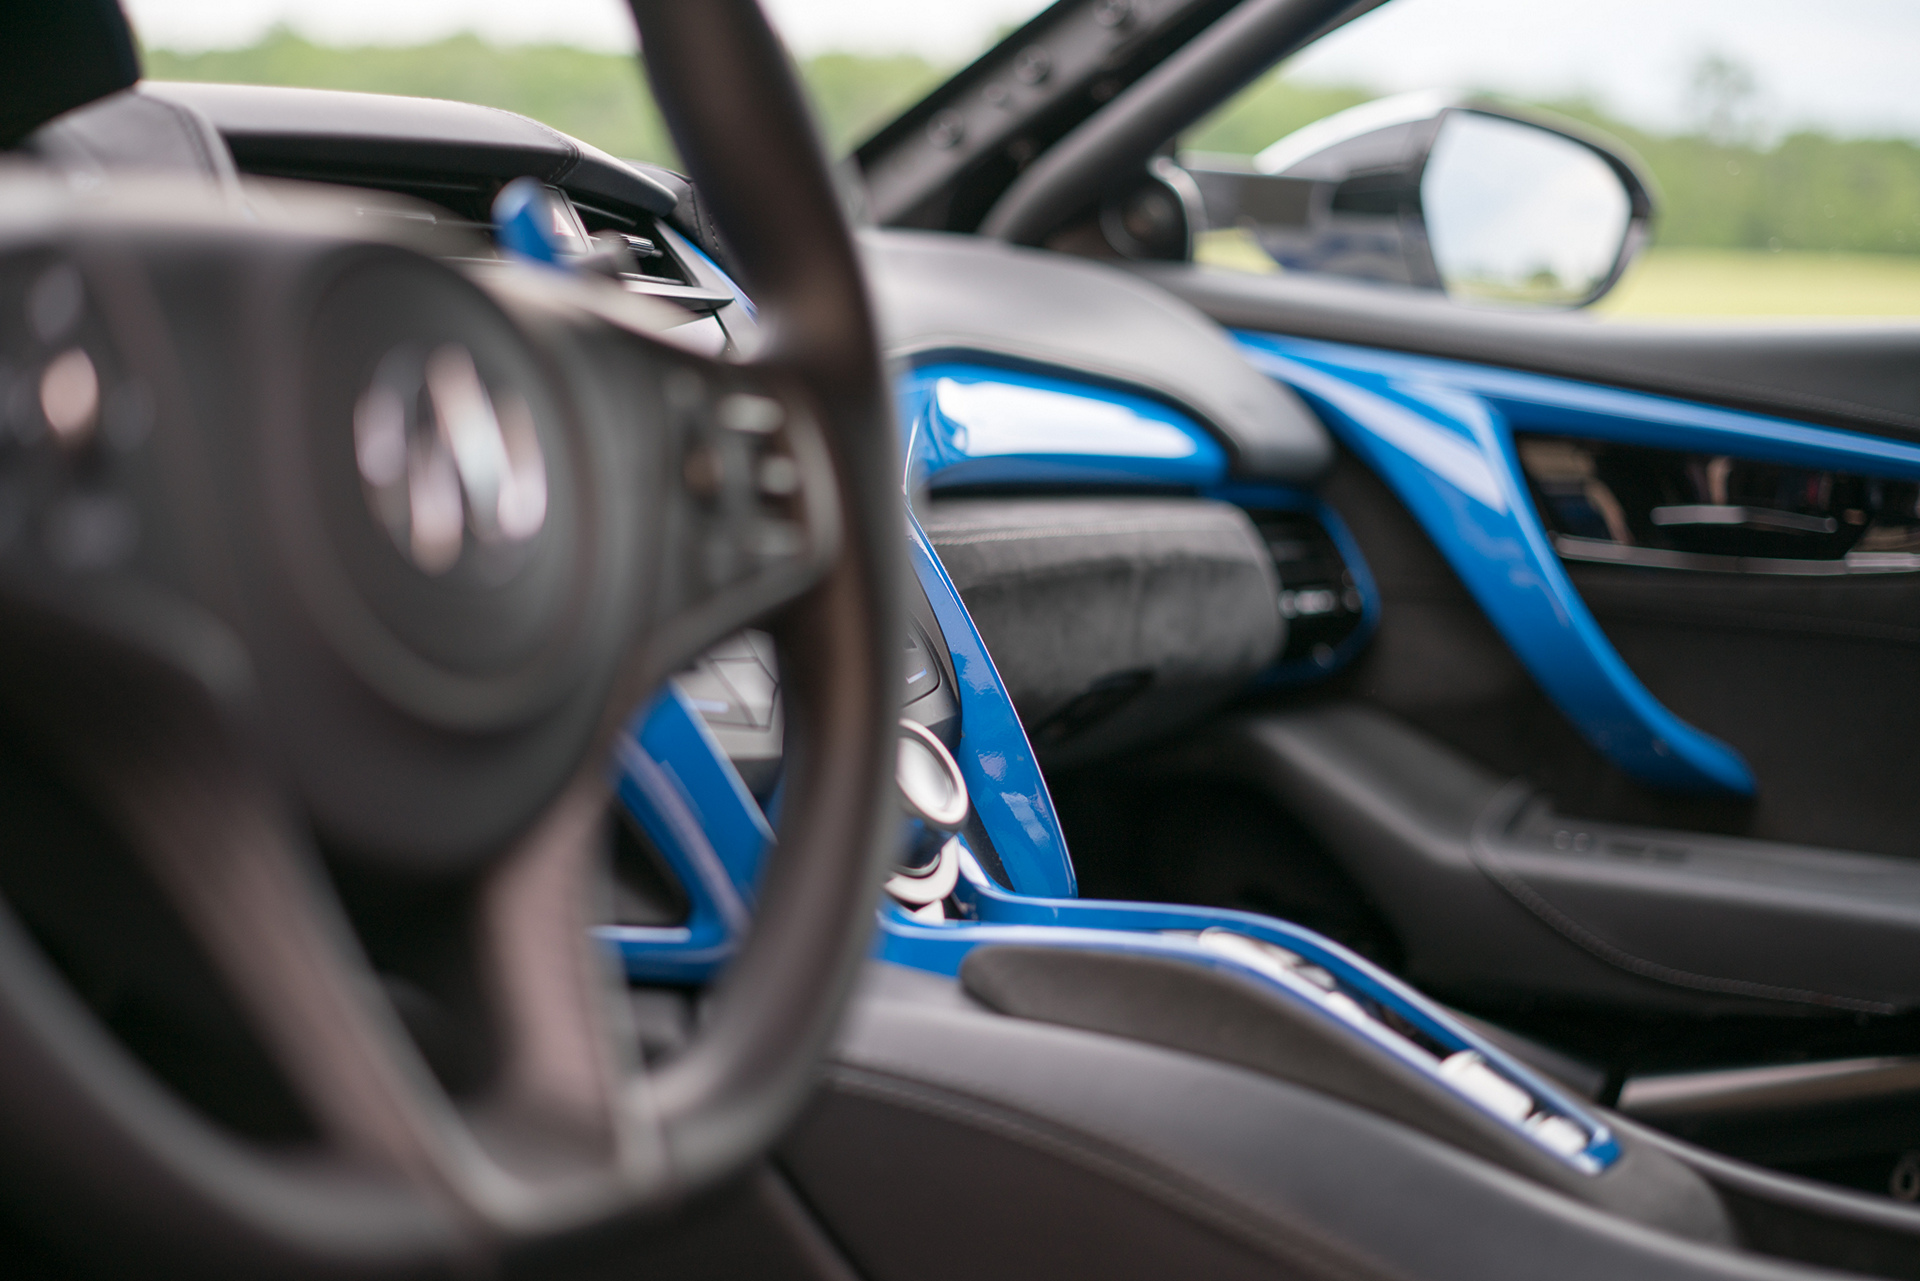 Interior of Acura NSX Time Attack 2 Vehicle © Honda Motor Co., Ltd.